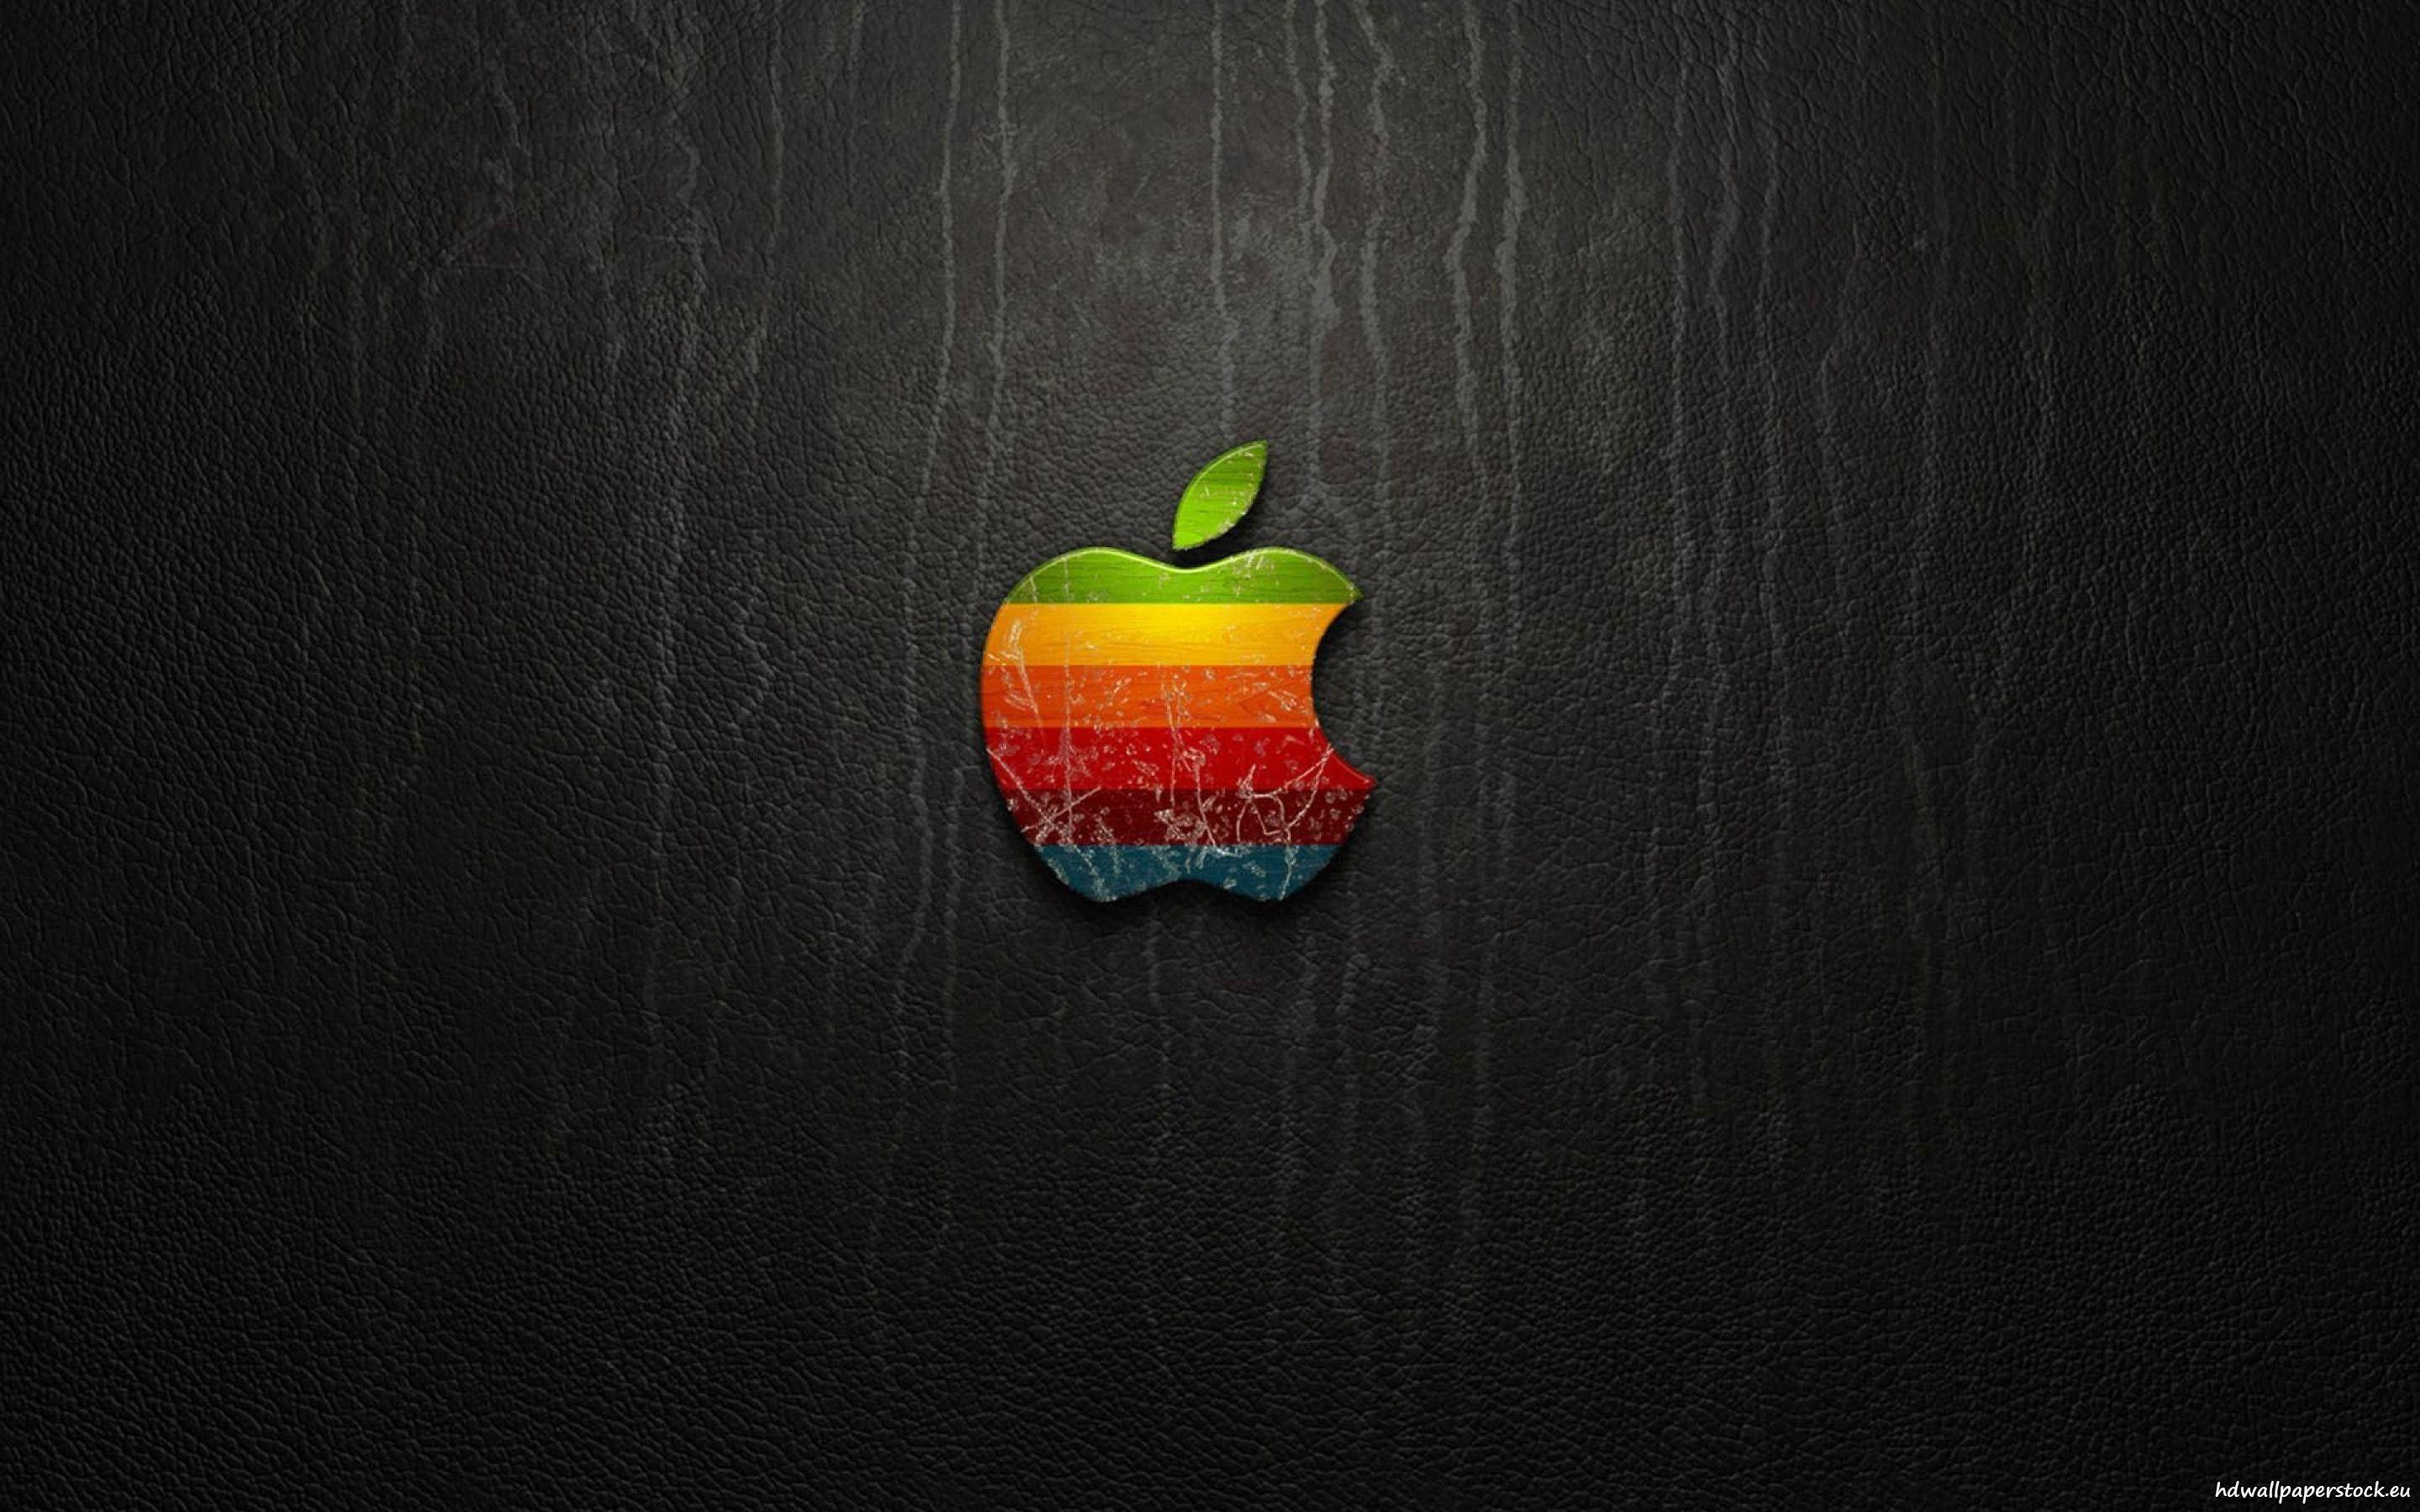 Colorful apple logo wallpaper download